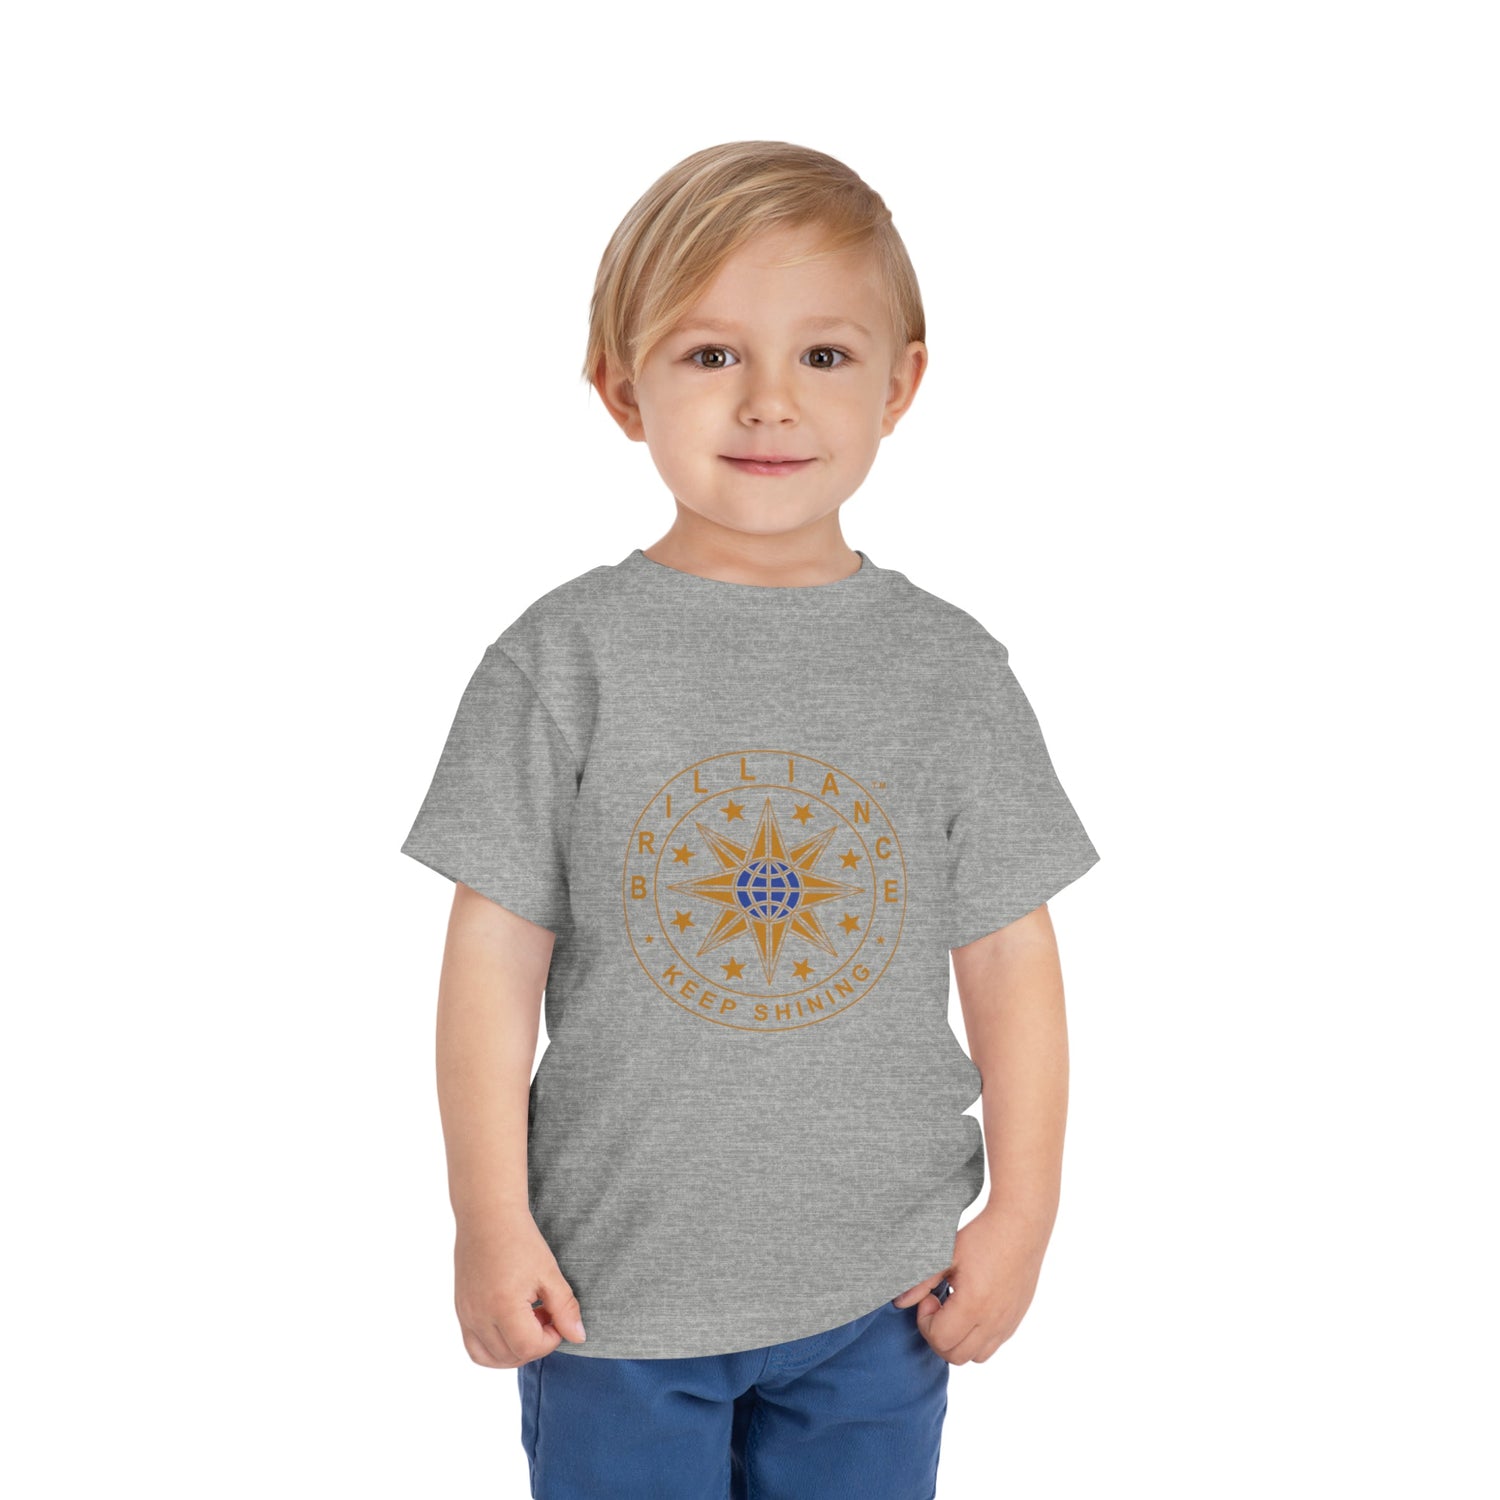 Brilliance Toddler T-Shirt Grey